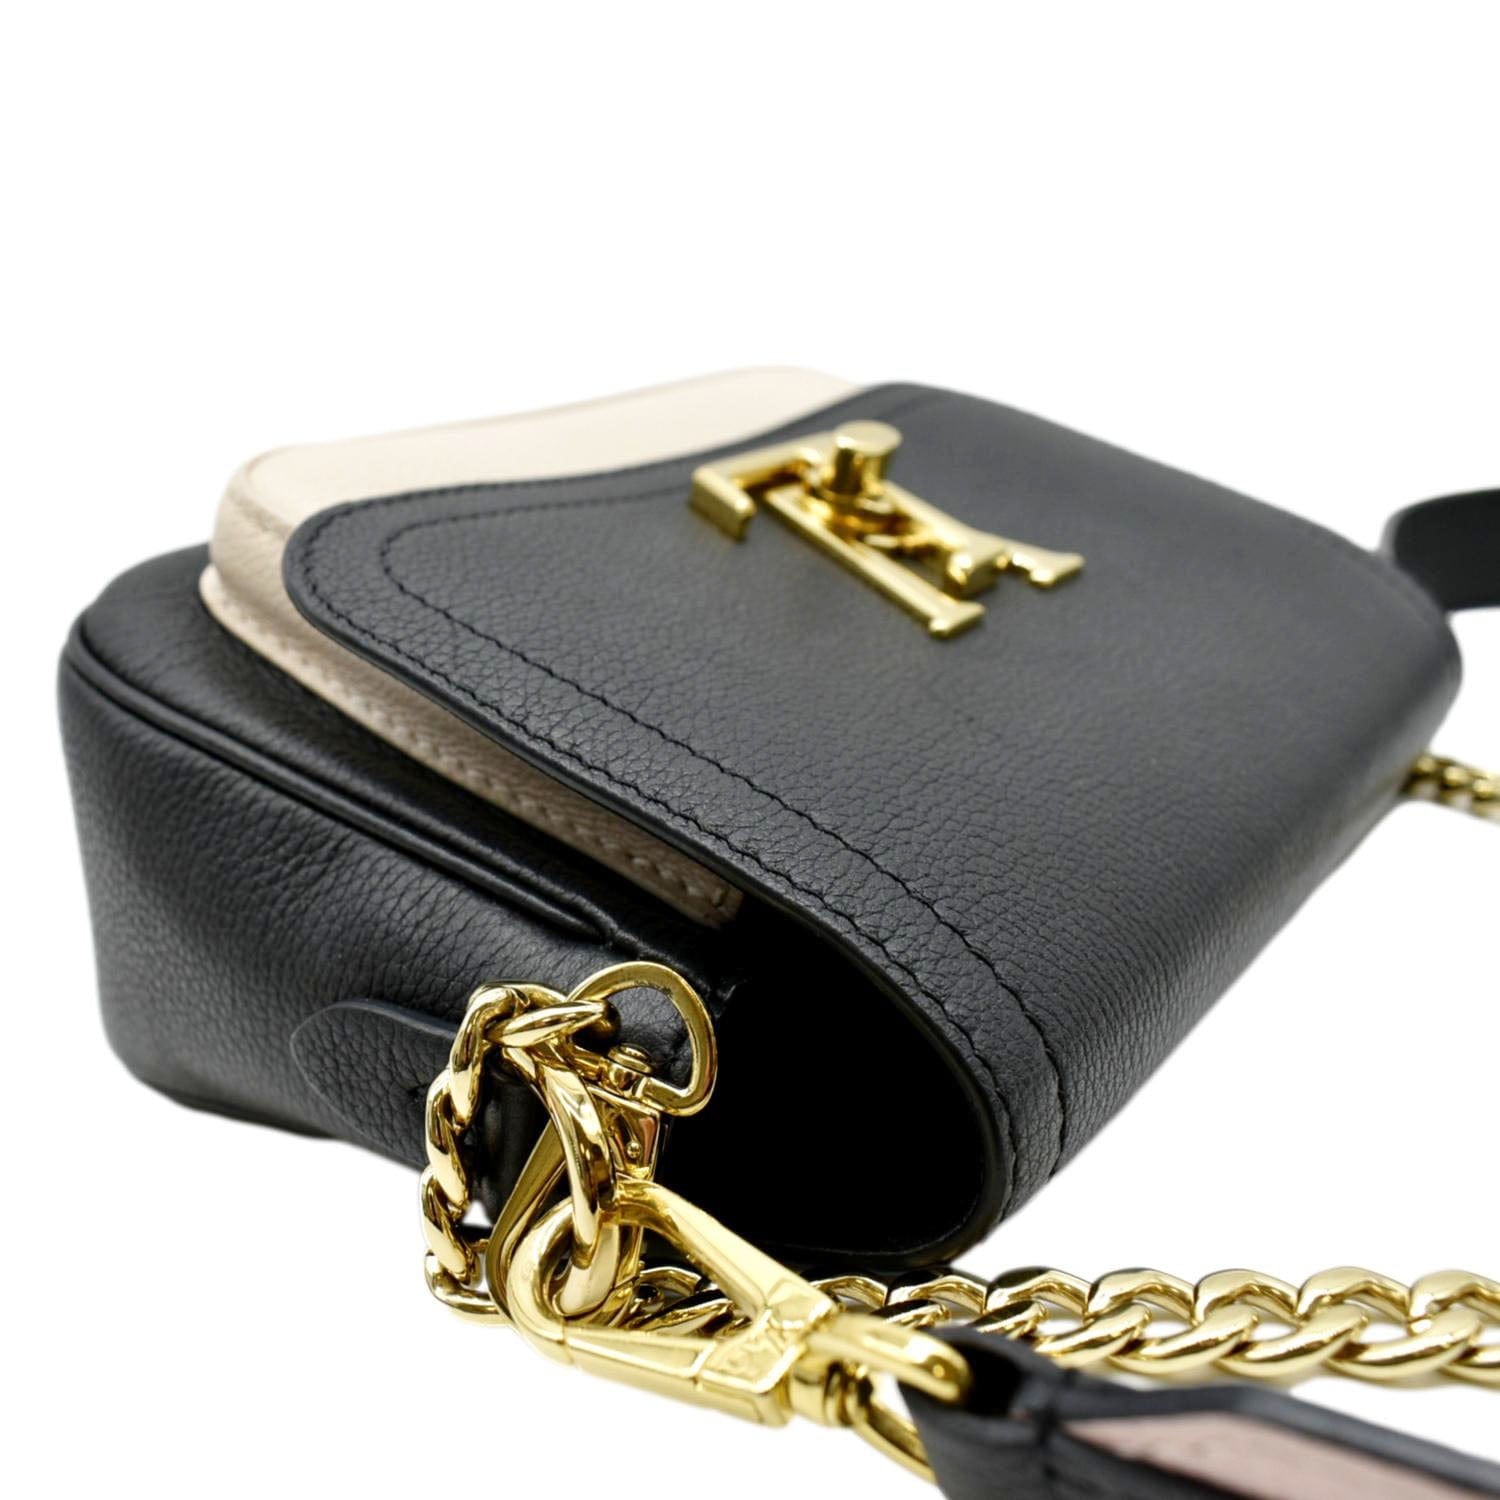 LockMe Tender Lockme Leather - Women - Handbags